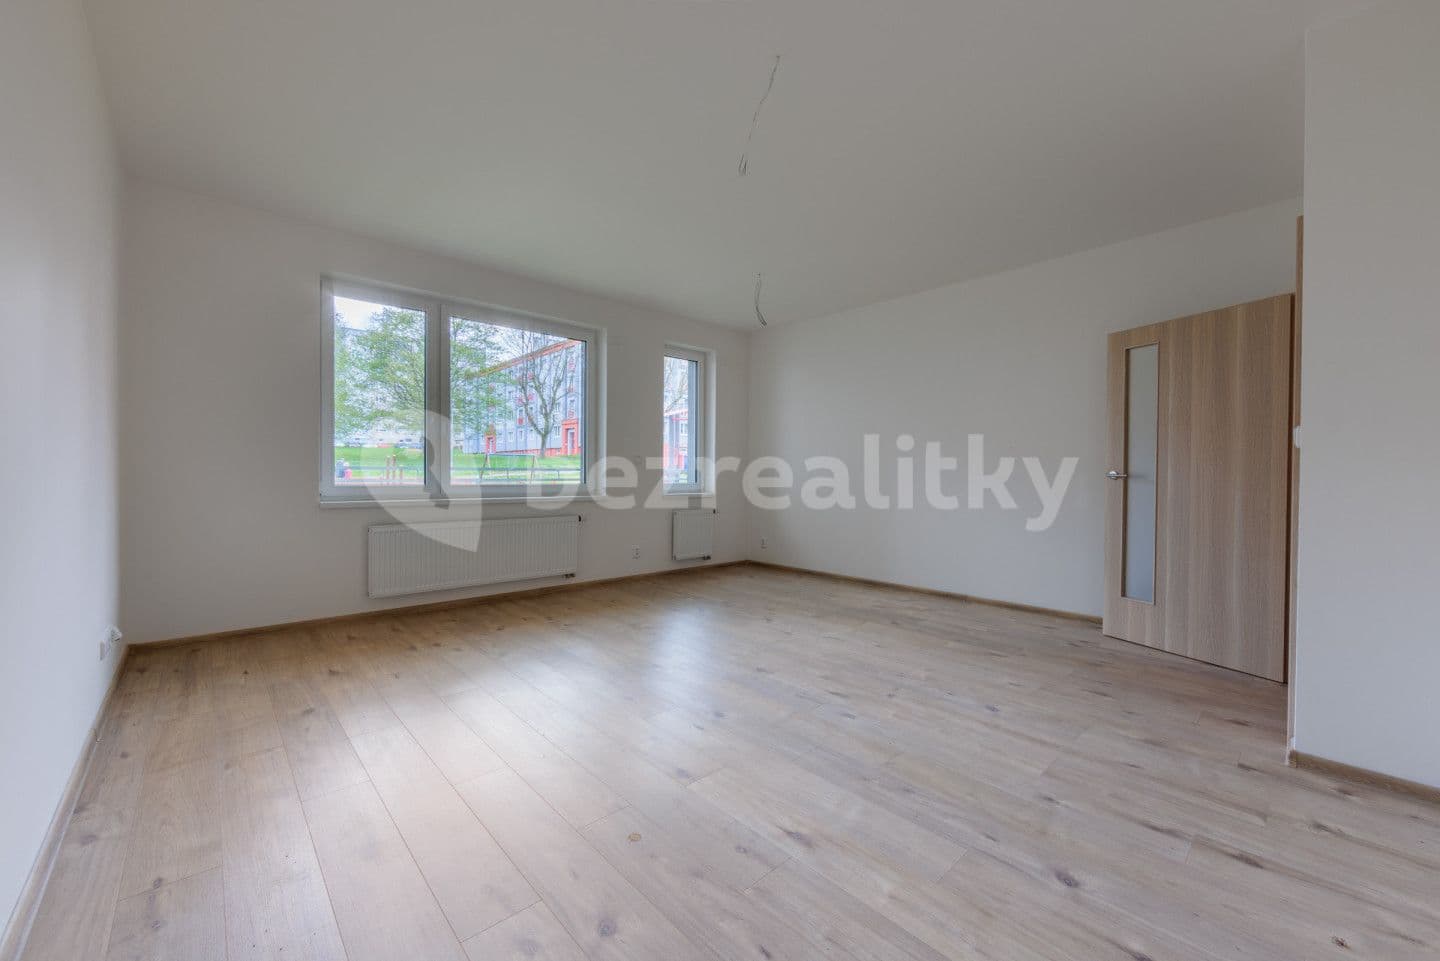 2 bedroom with open-plan kitchen flat for sale, 70 m², Myslbekova, Ostrov, Karlovarský Region